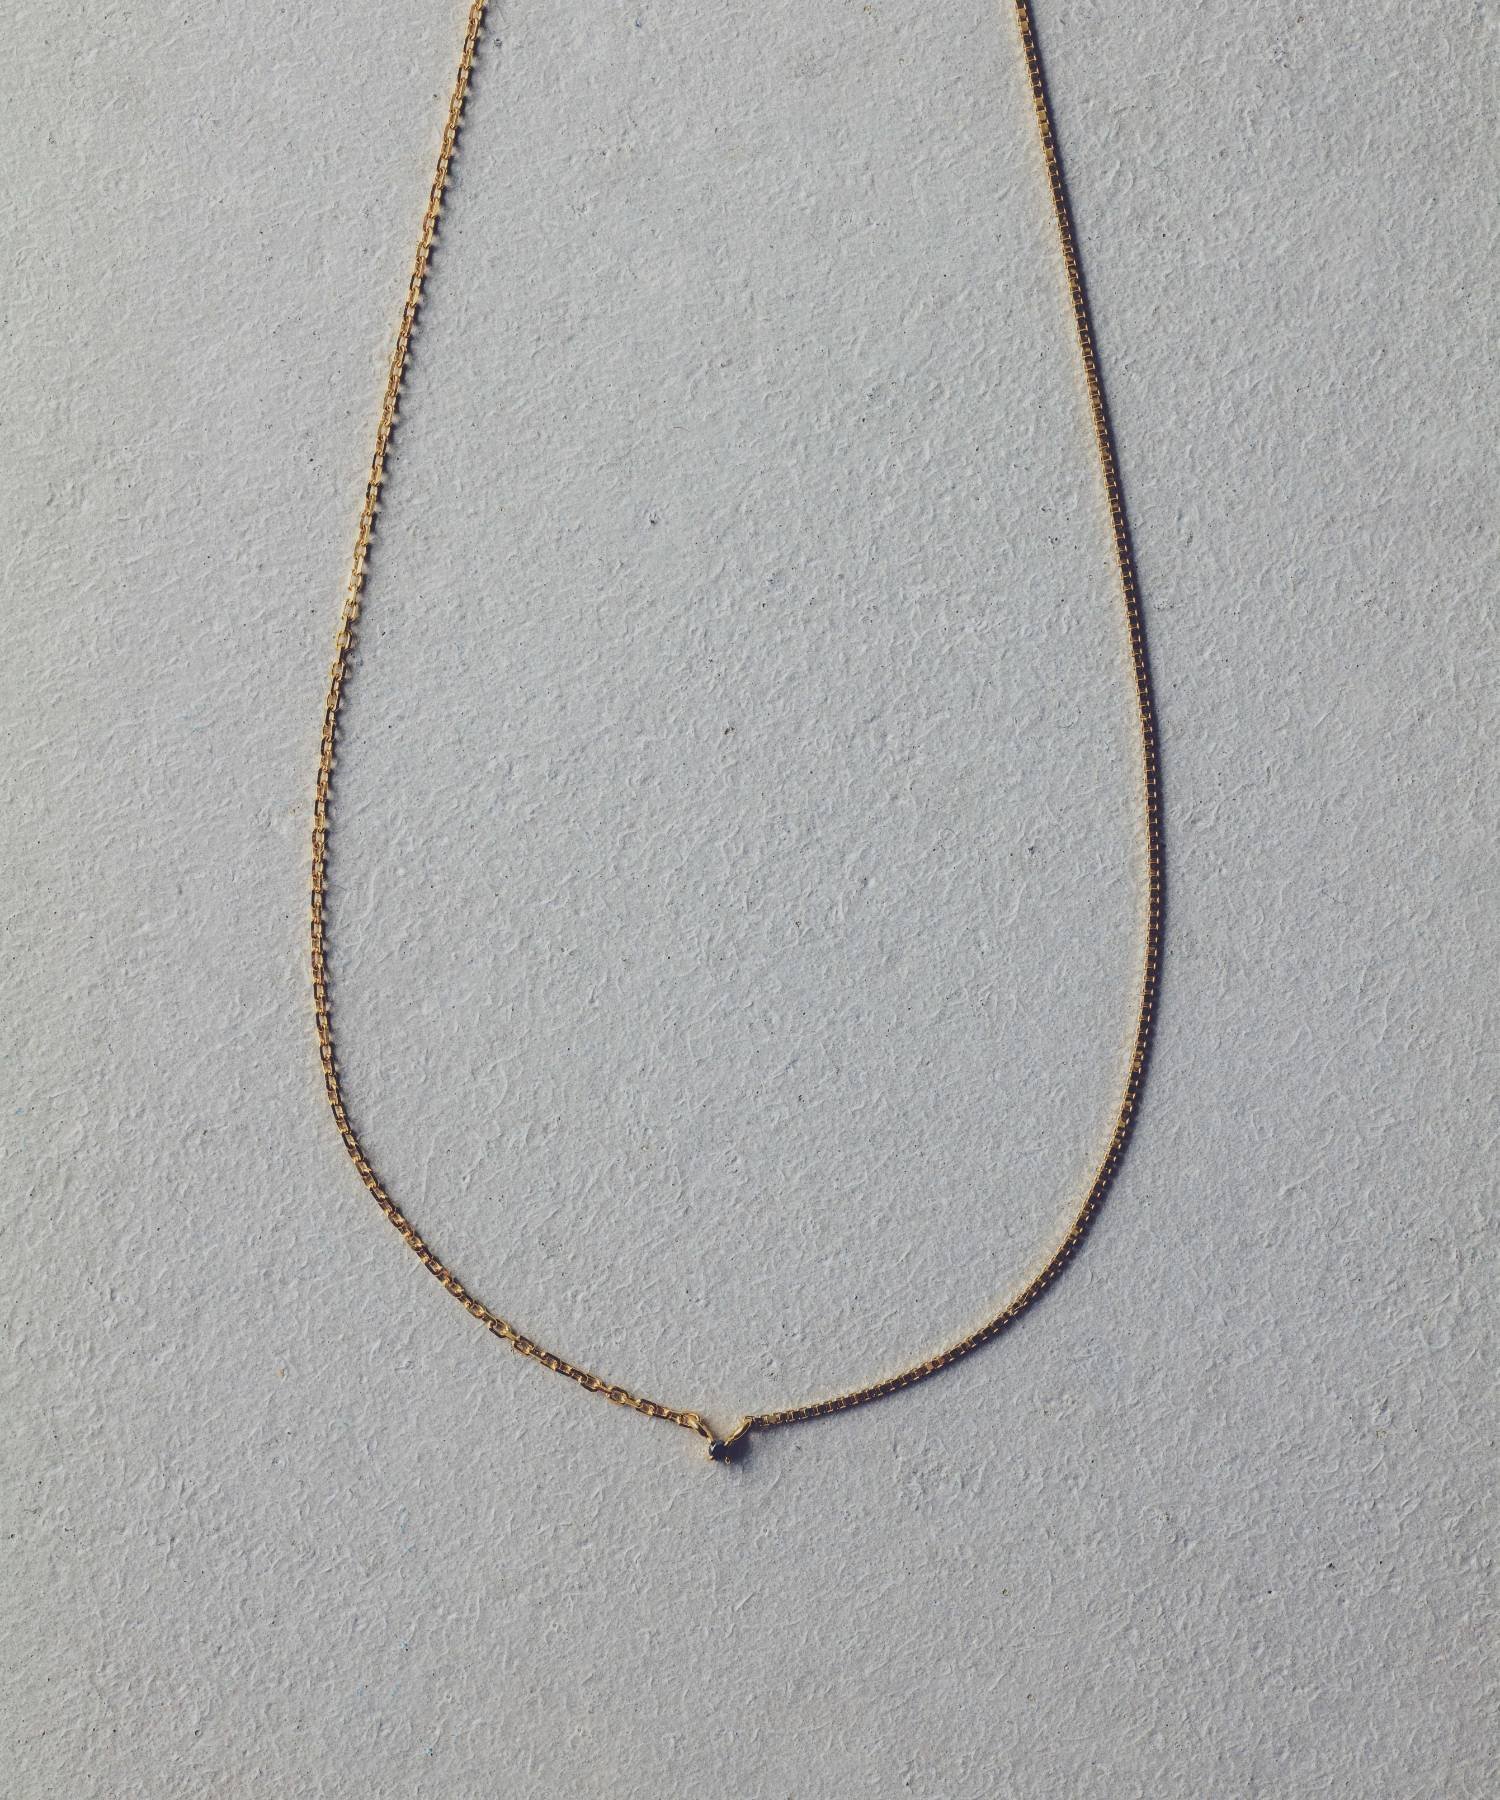 Zara Necklace black glittery Jewelry Chains Necklaces 